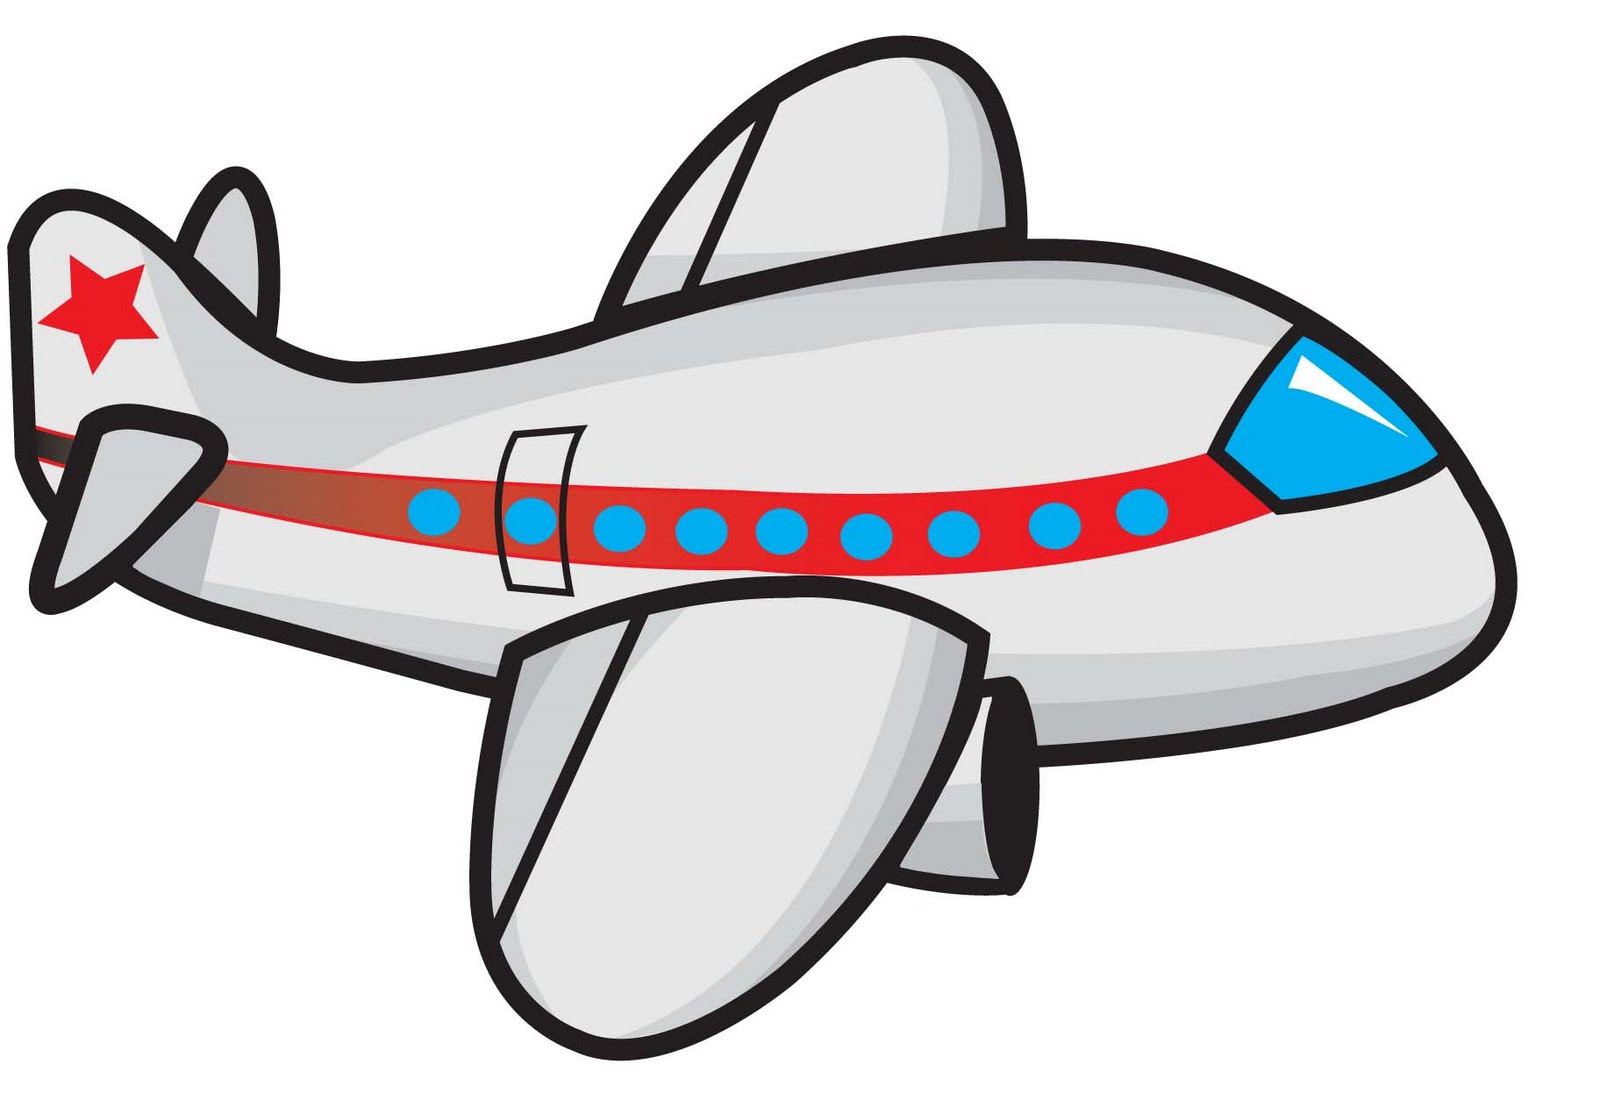 Cartoon planes clipart - ClipartFox